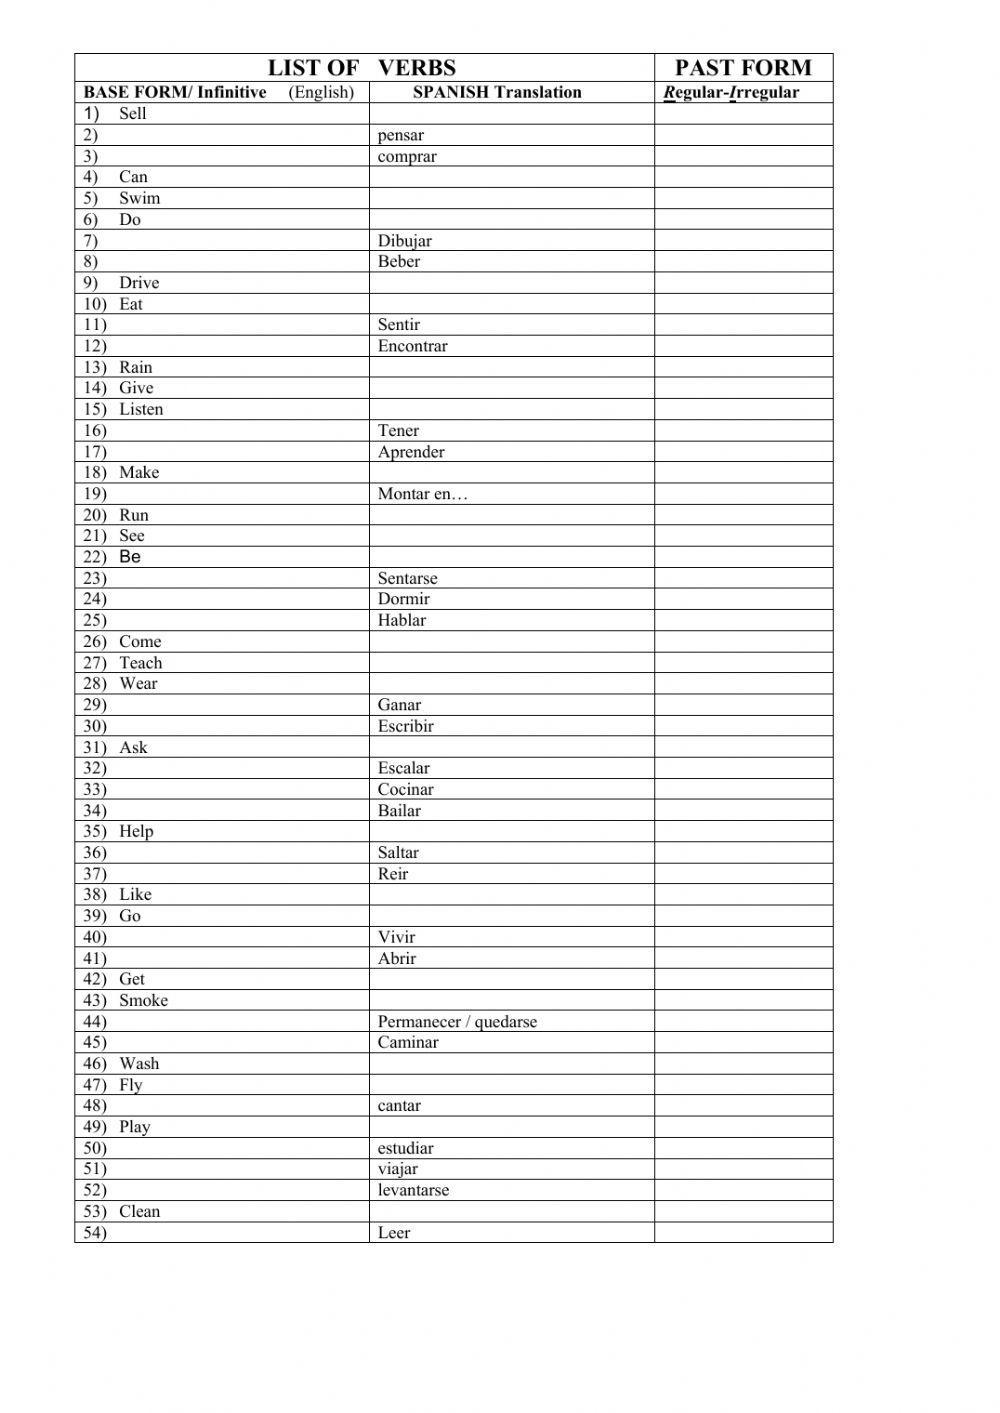 List of Regular and Irregular verbs